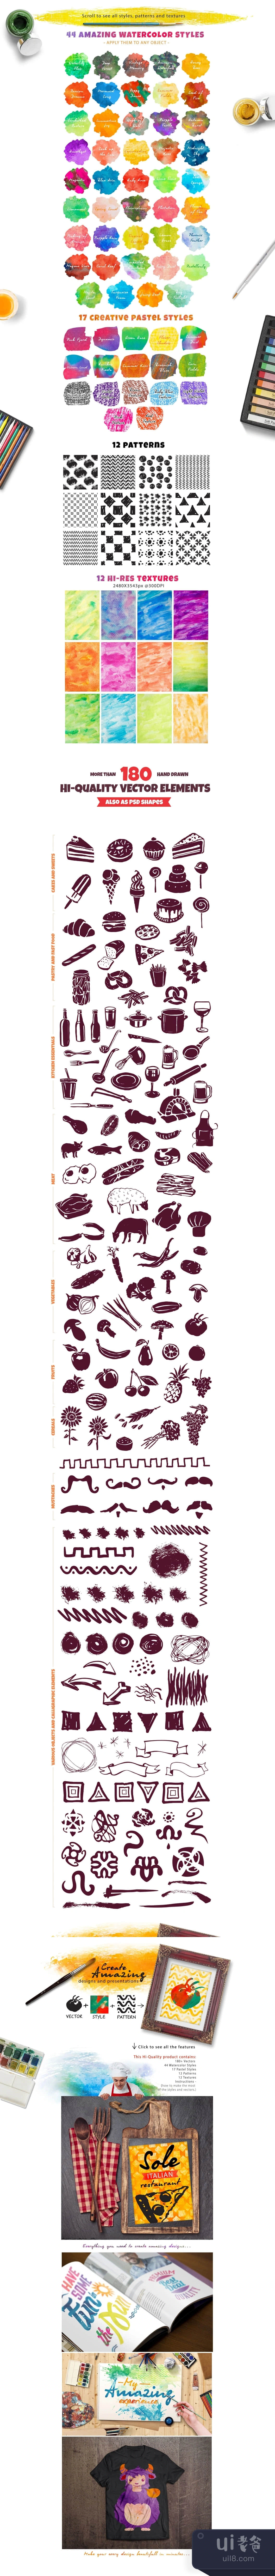 餐厅水彩套装 (Restaurant Watercolor Kit)插图